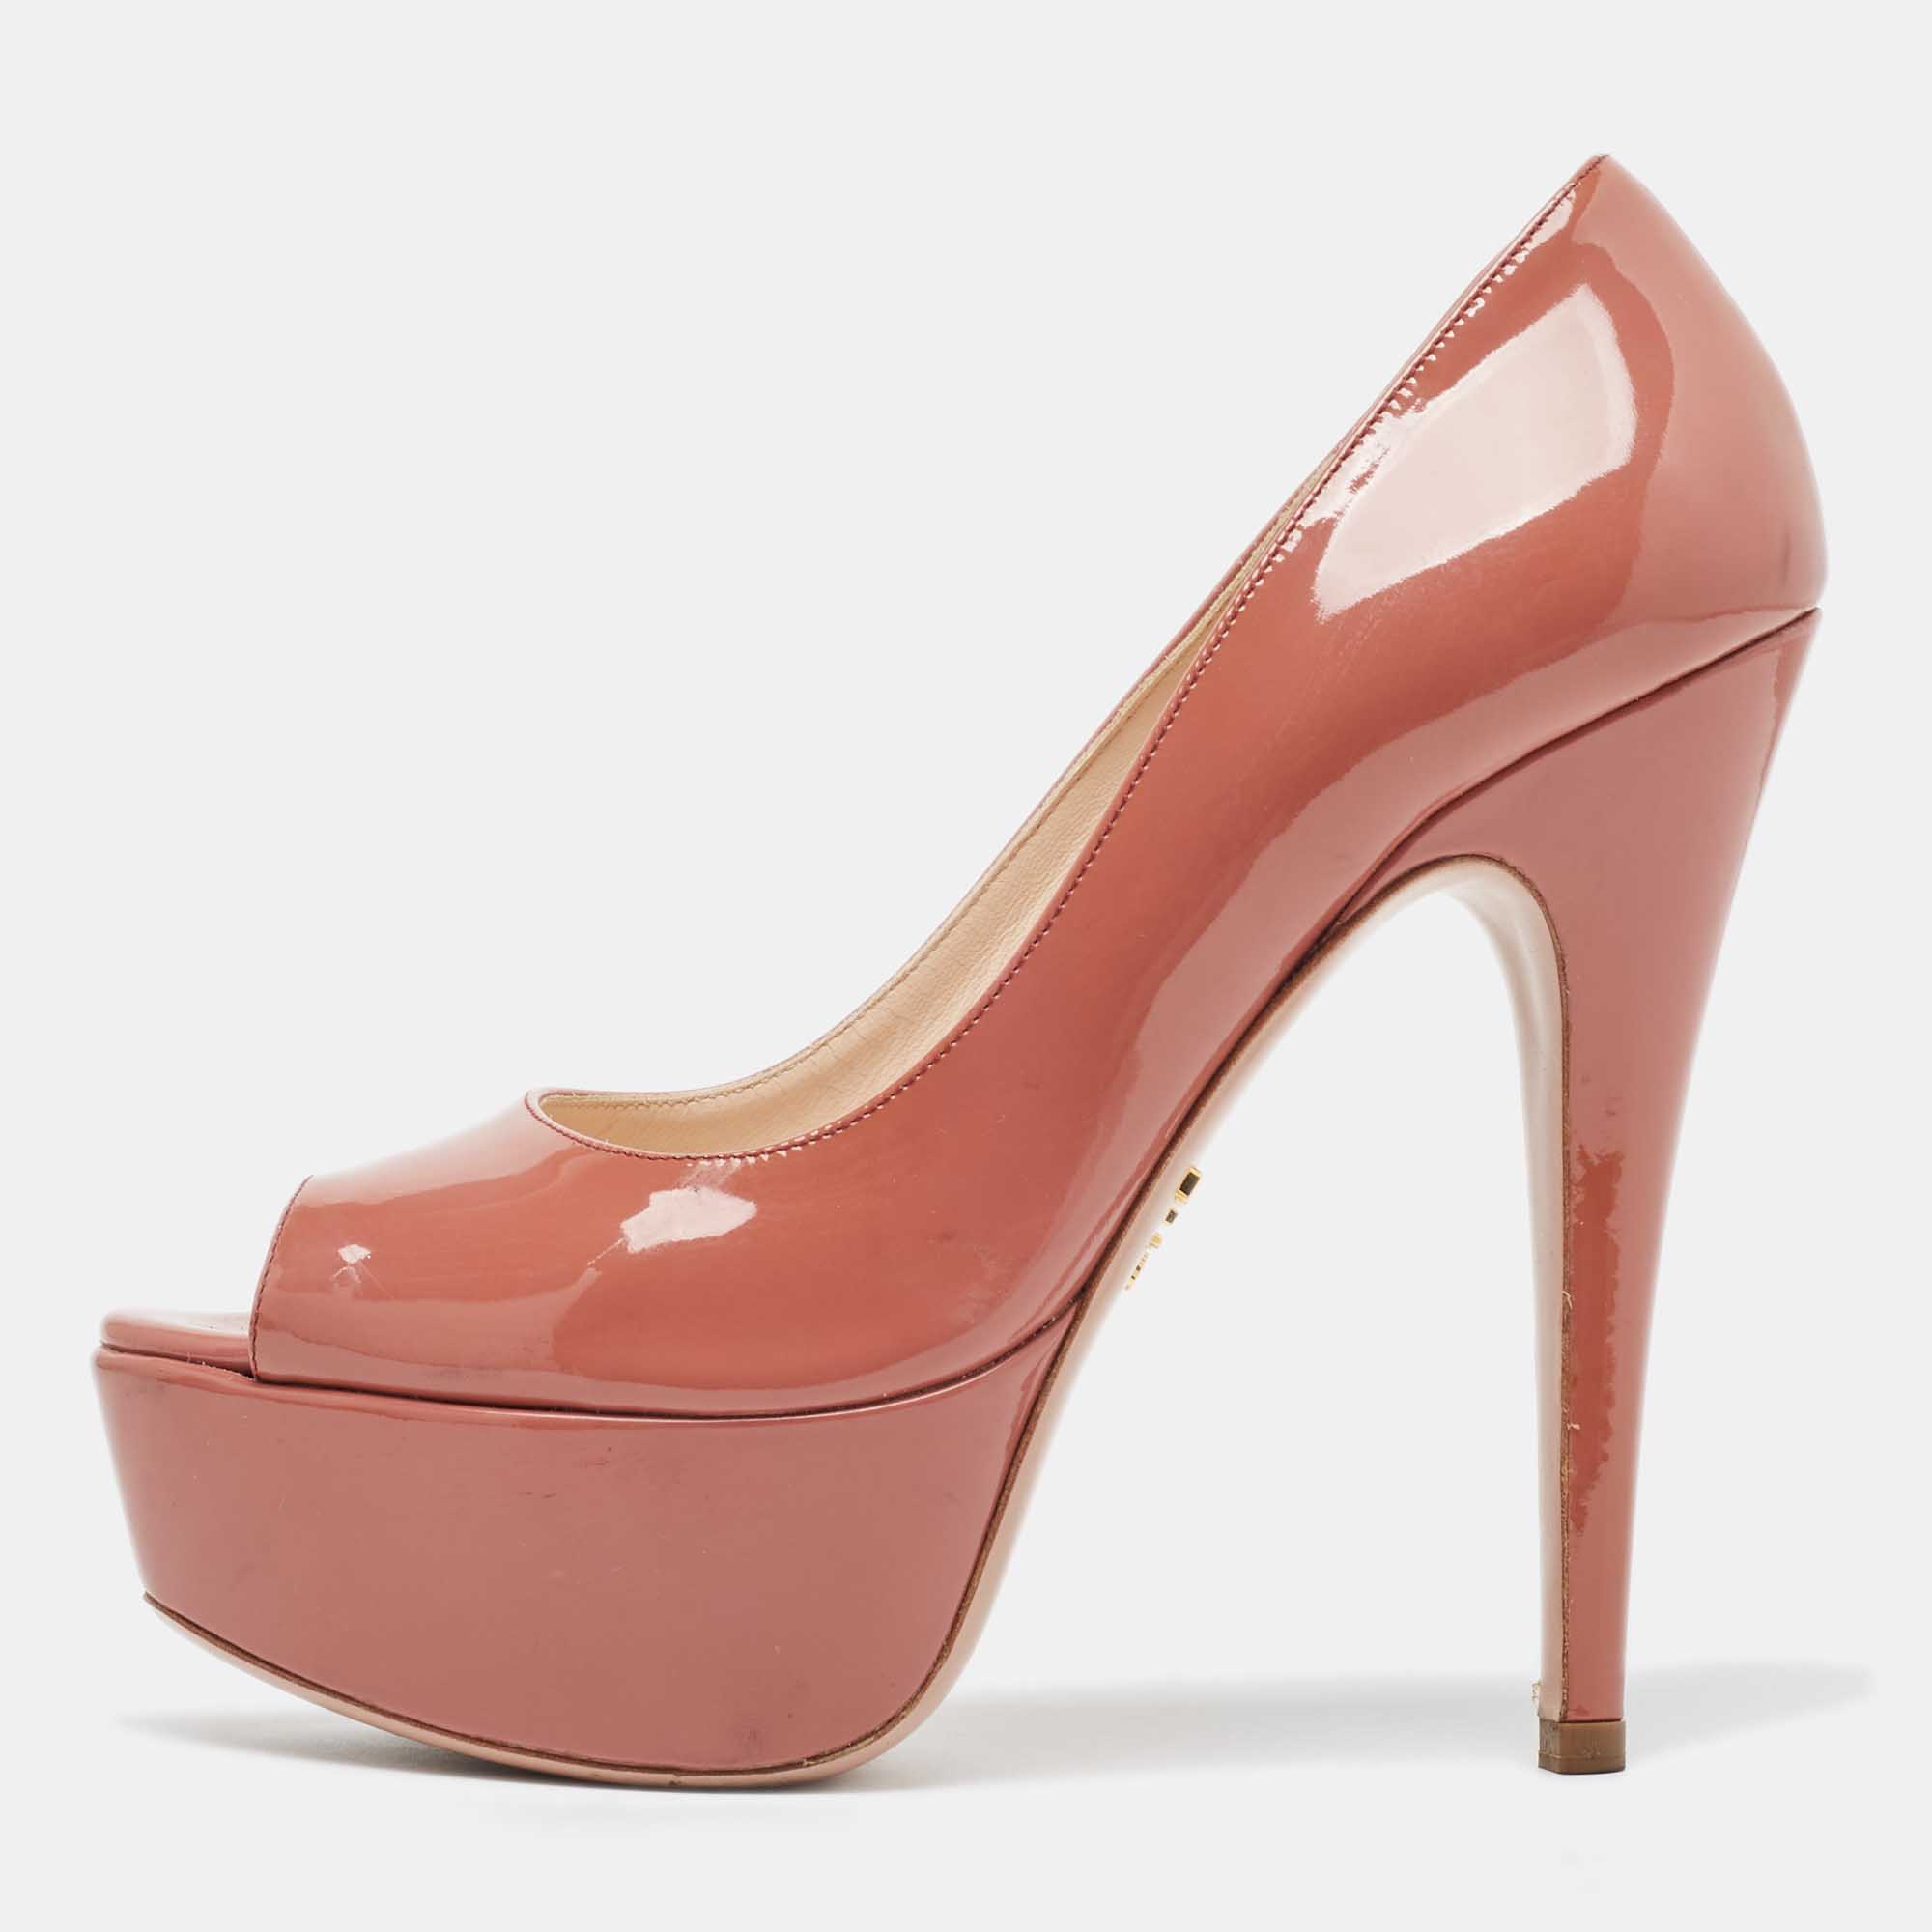 Prada pink patent leather platform peep toe pumps size 37